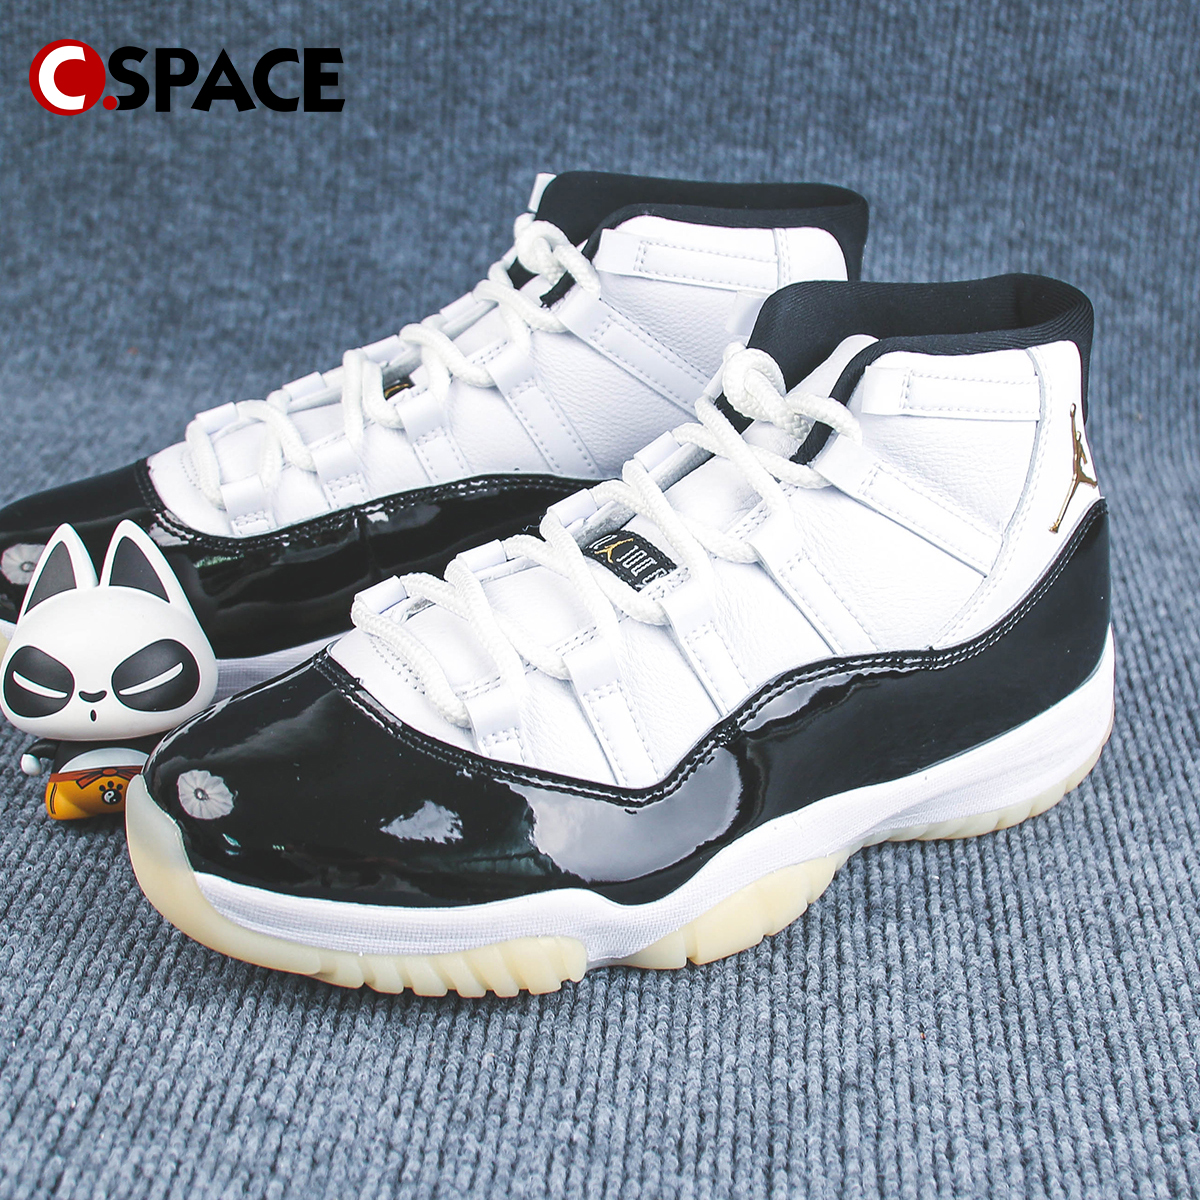 Cspace DP Air Jordan 11 AJ11 白黑金 高帮篮球鞋CT8012-170 运动鞋new 篮球鞋 原图主图